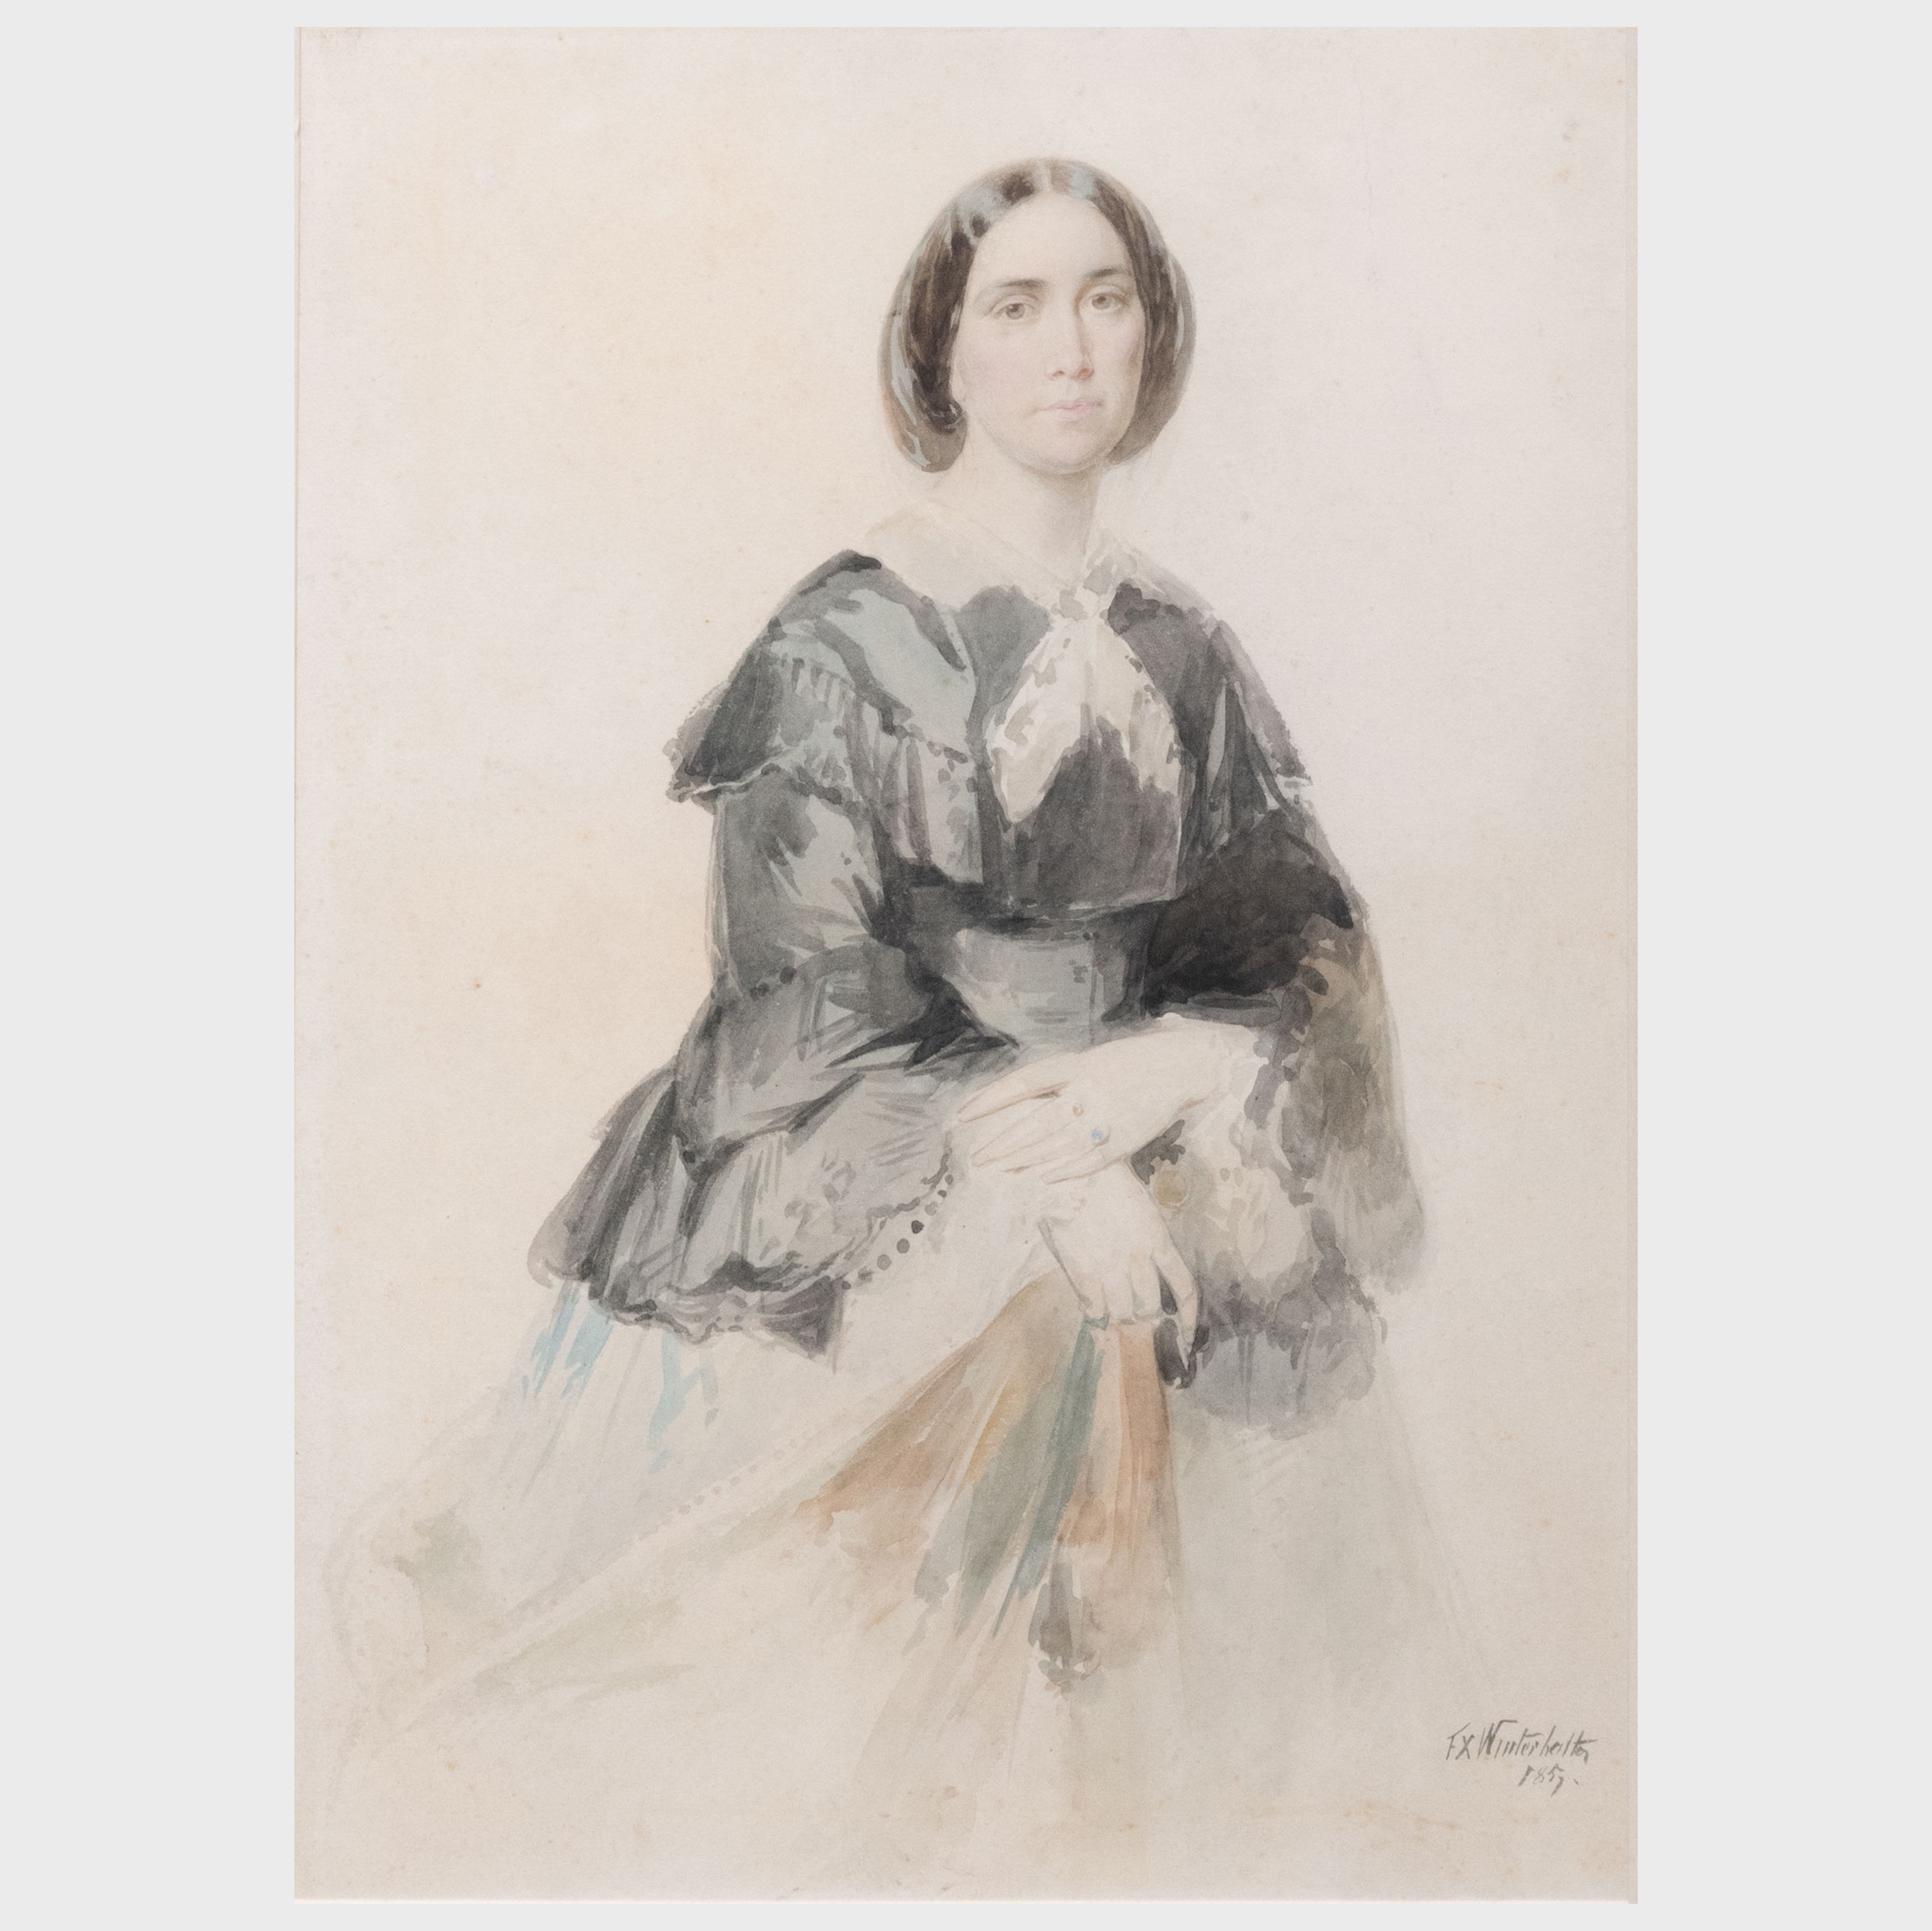 Artwork by Franz Xaver Winterhalter, La Princesse Mathilde, Made of Watercolor on heavy paper